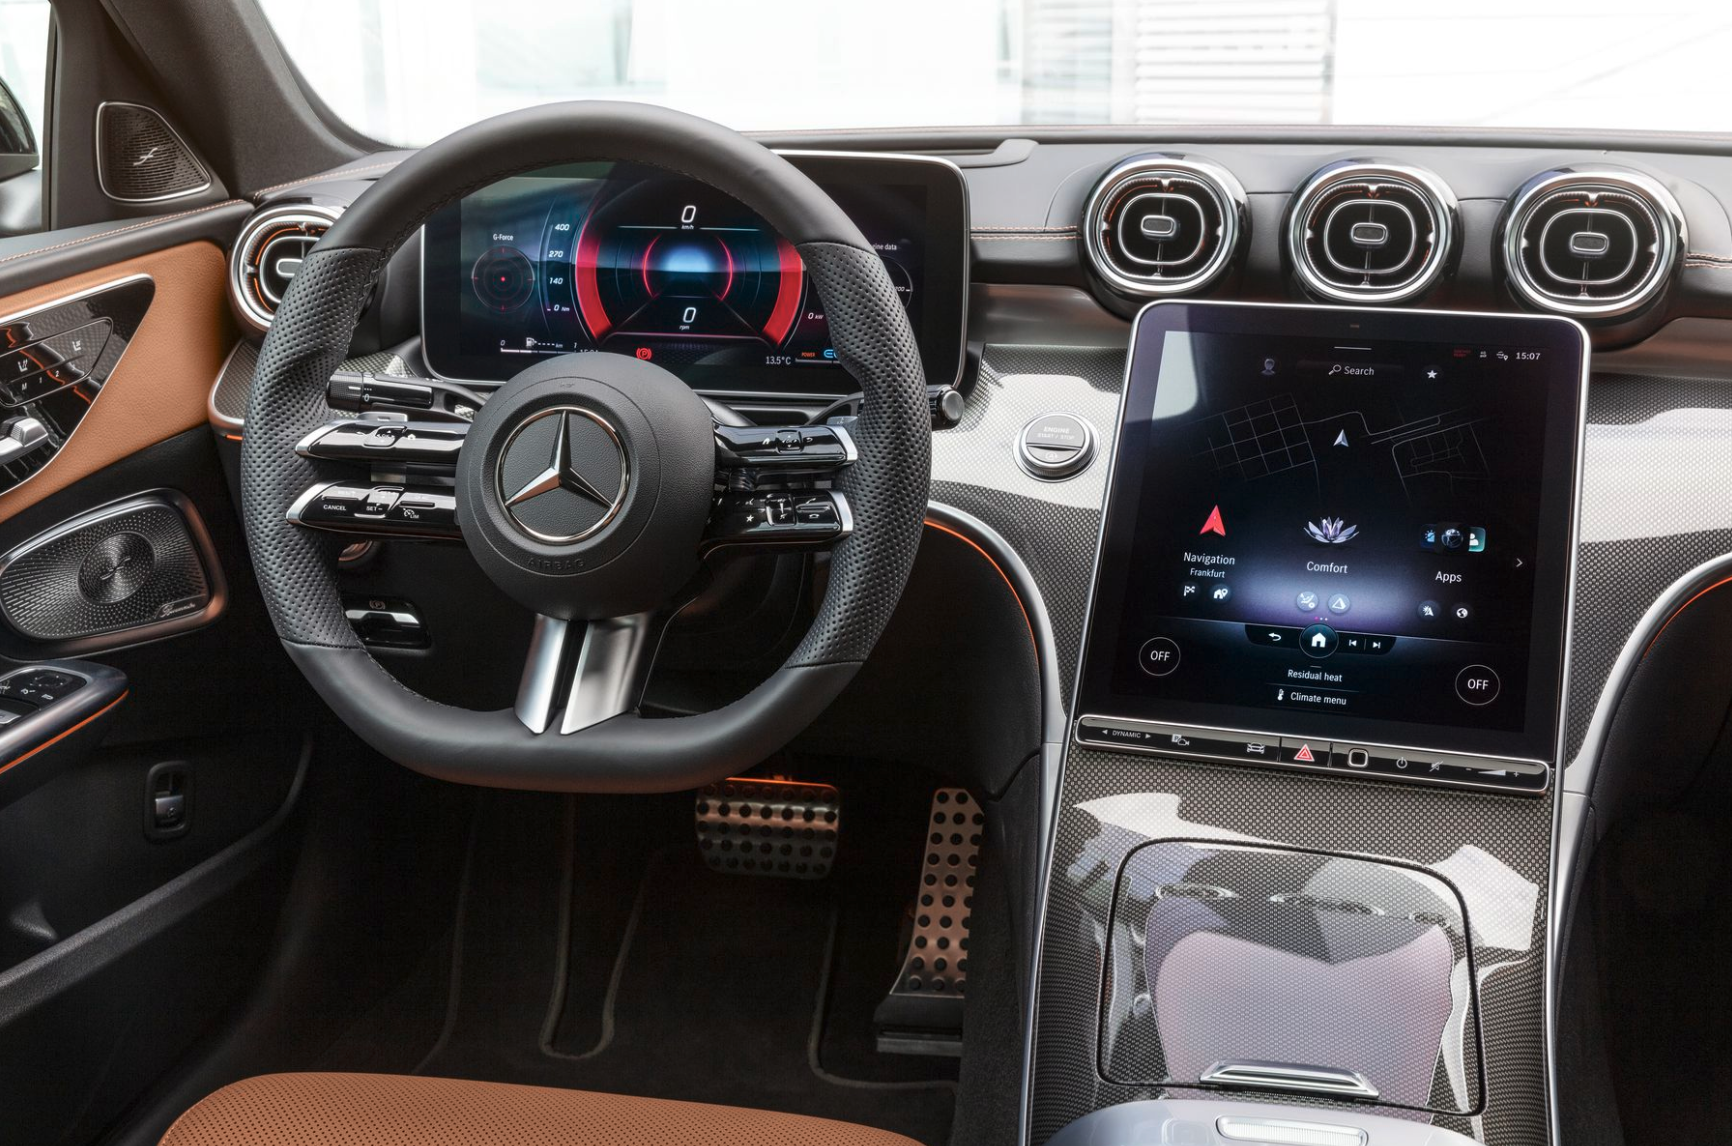 New Mercedes Benz C Class Features Next Gen Mbux Nvidia Blog